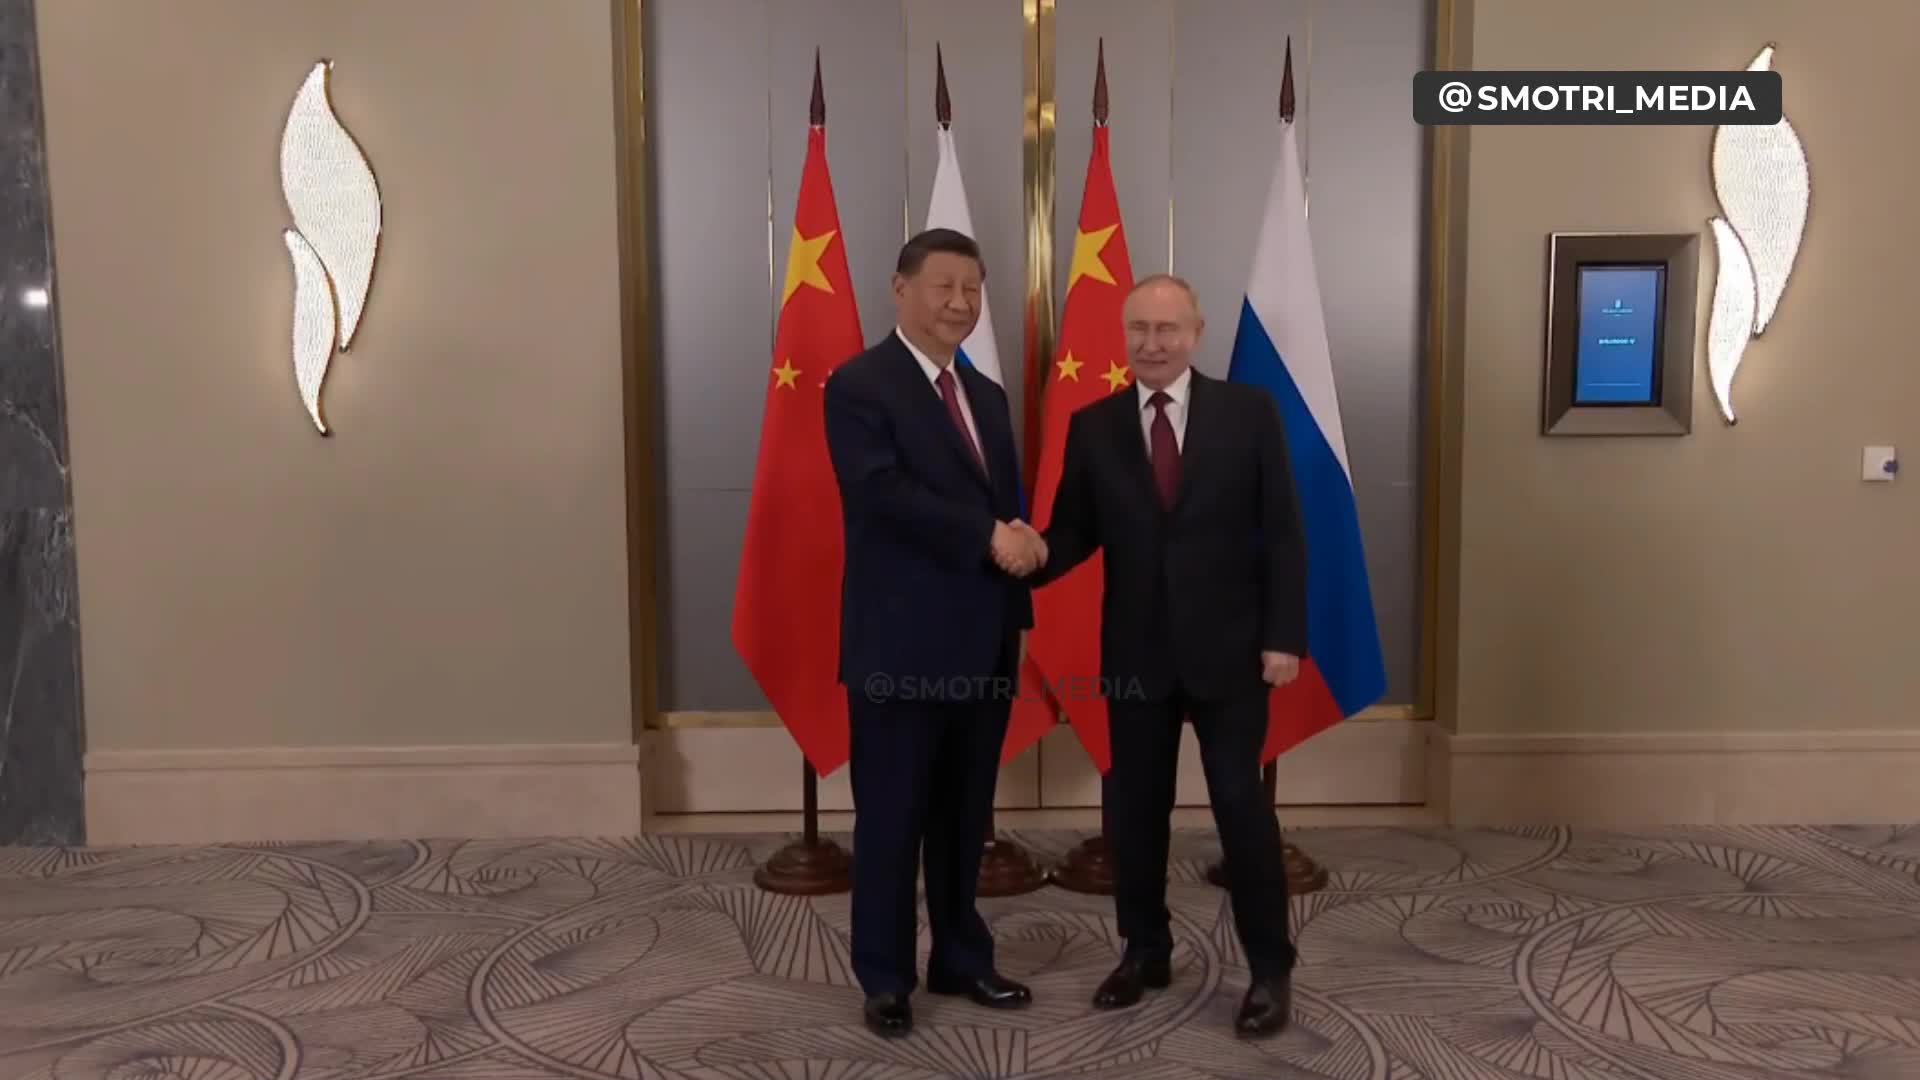 Putin begins negotiations with Xi Jinping.